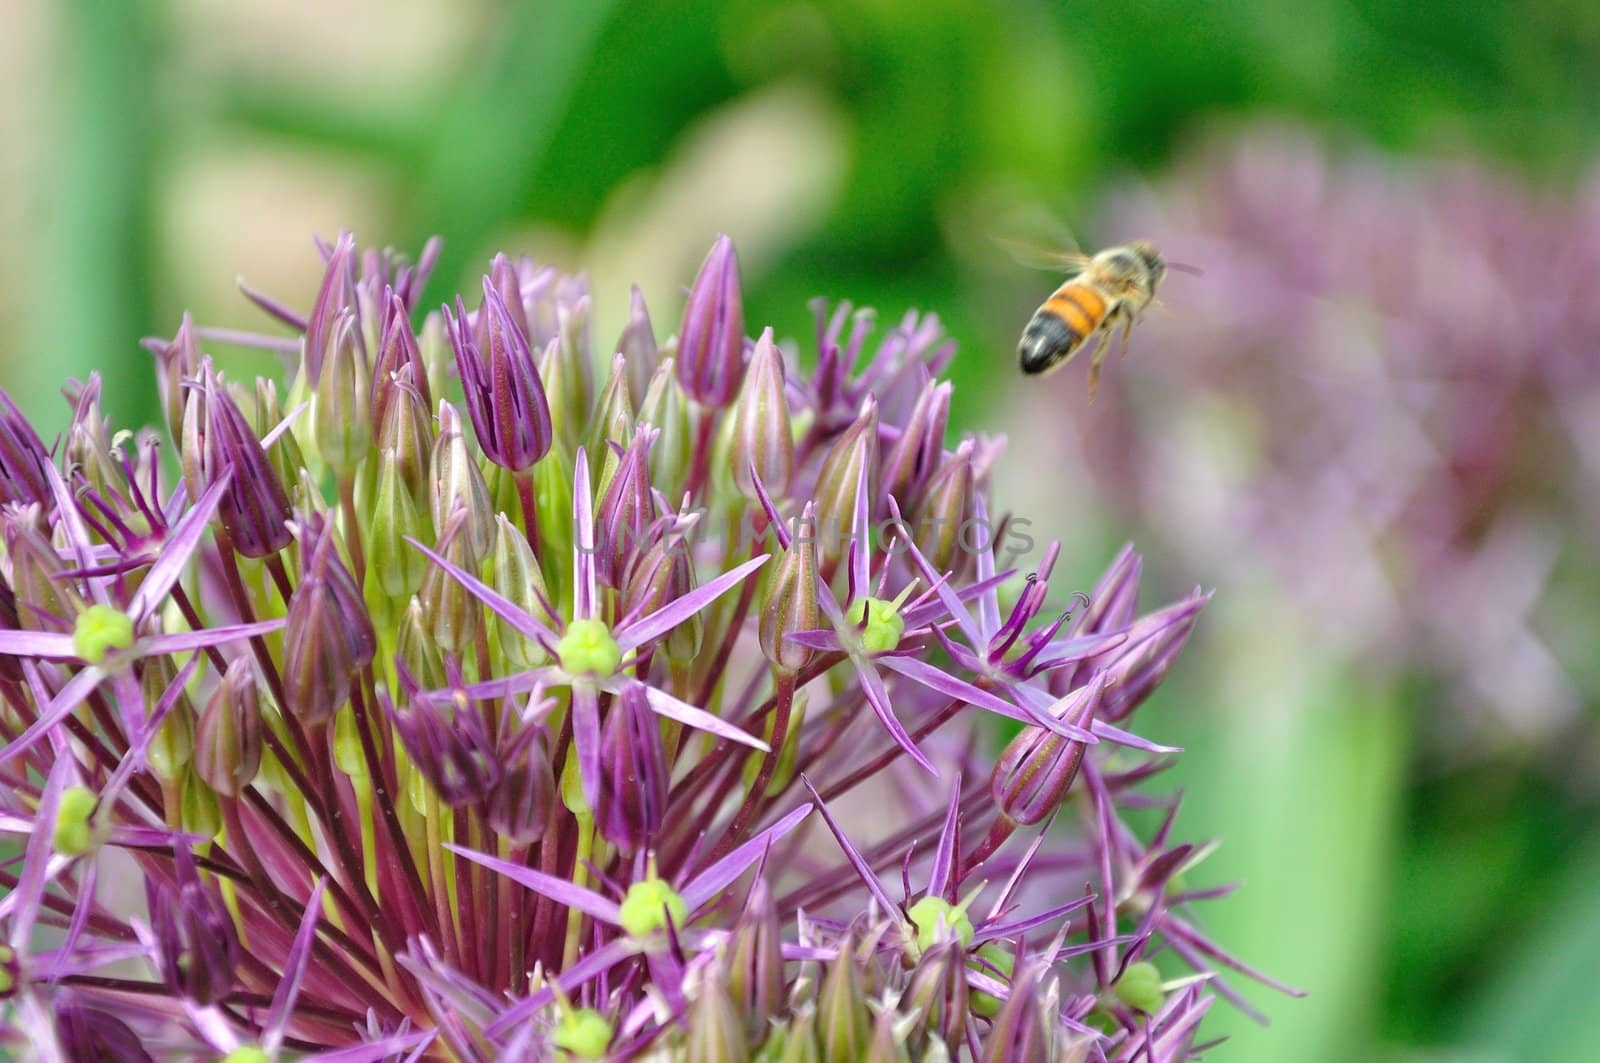 Bee on Purple Flower by gilmourbto2001